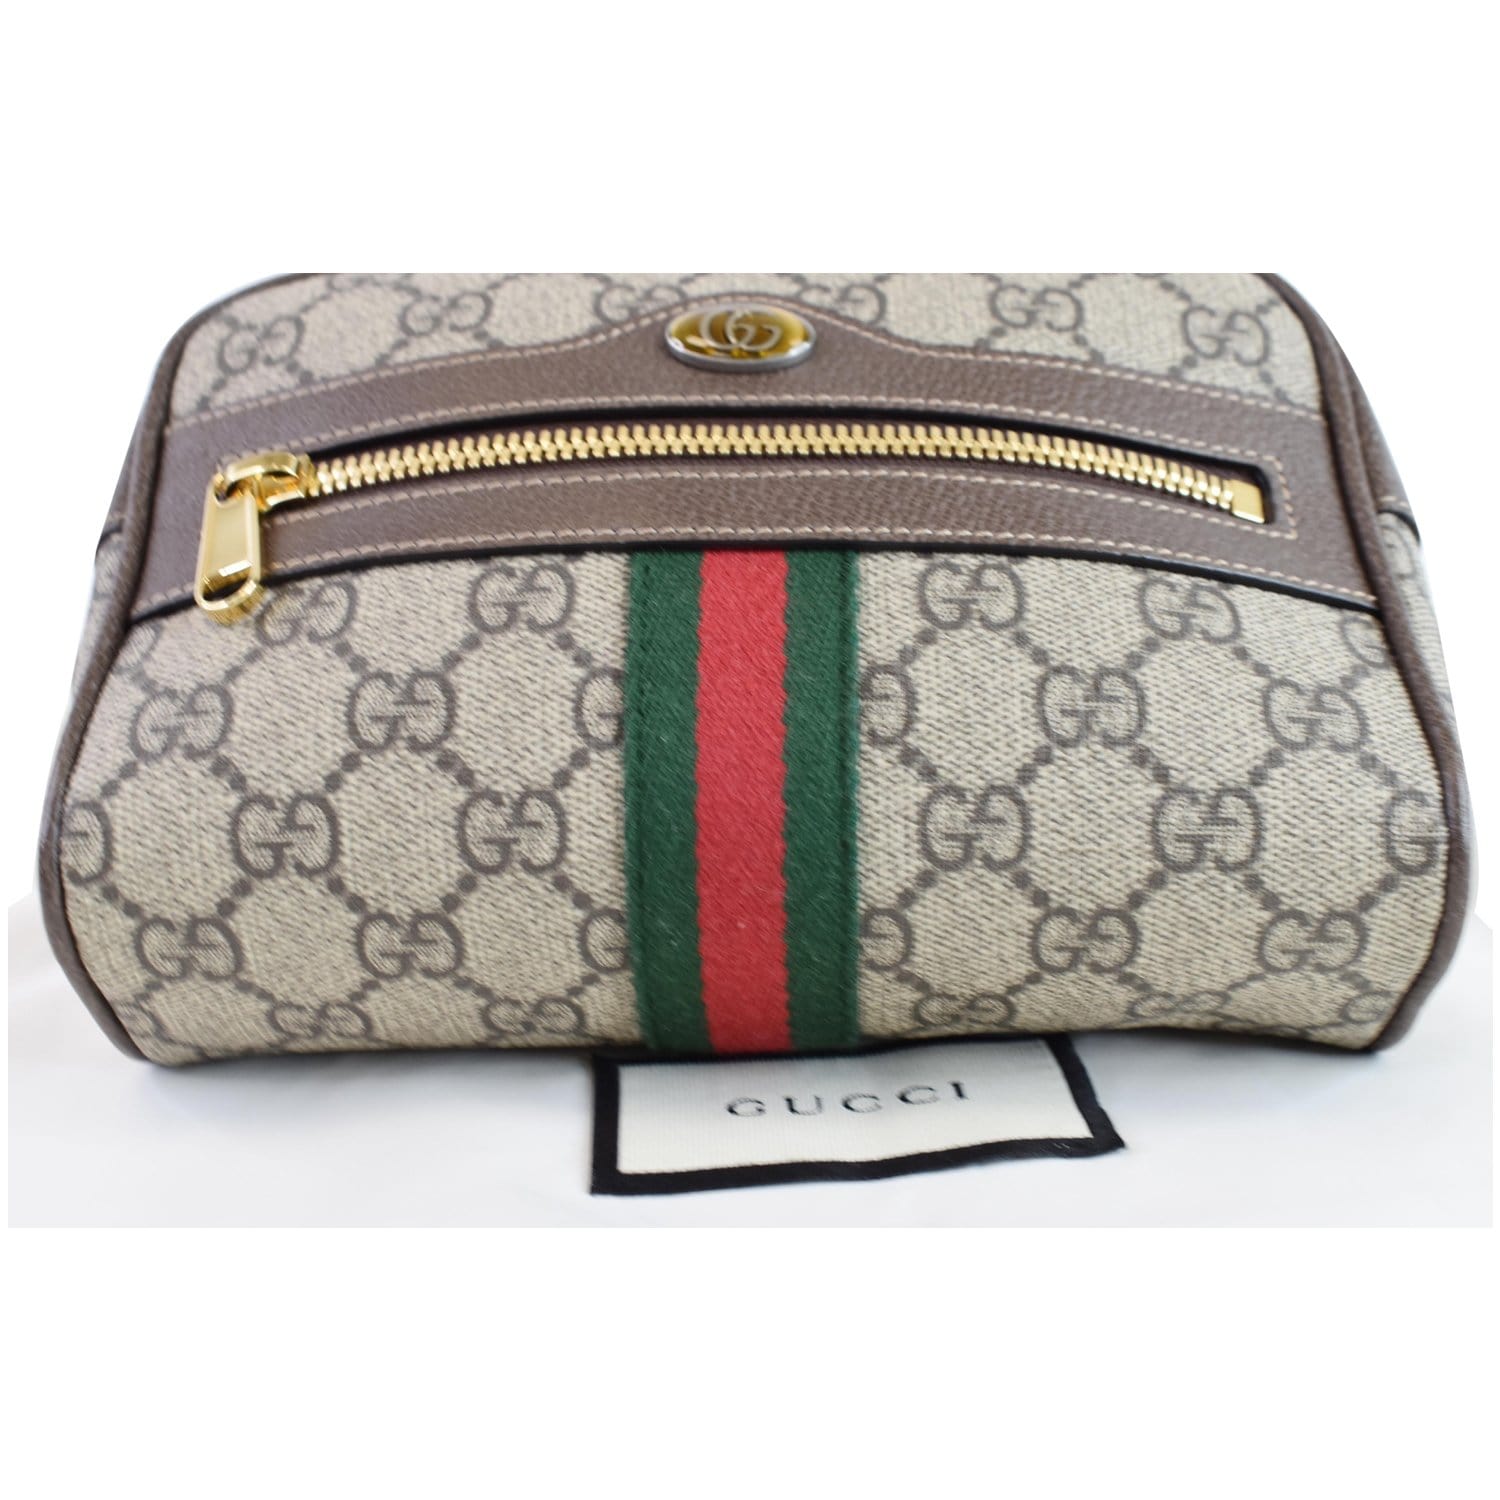 Gucci - Ophidia Belt Bag - Women - Canvas - 110 - Brown